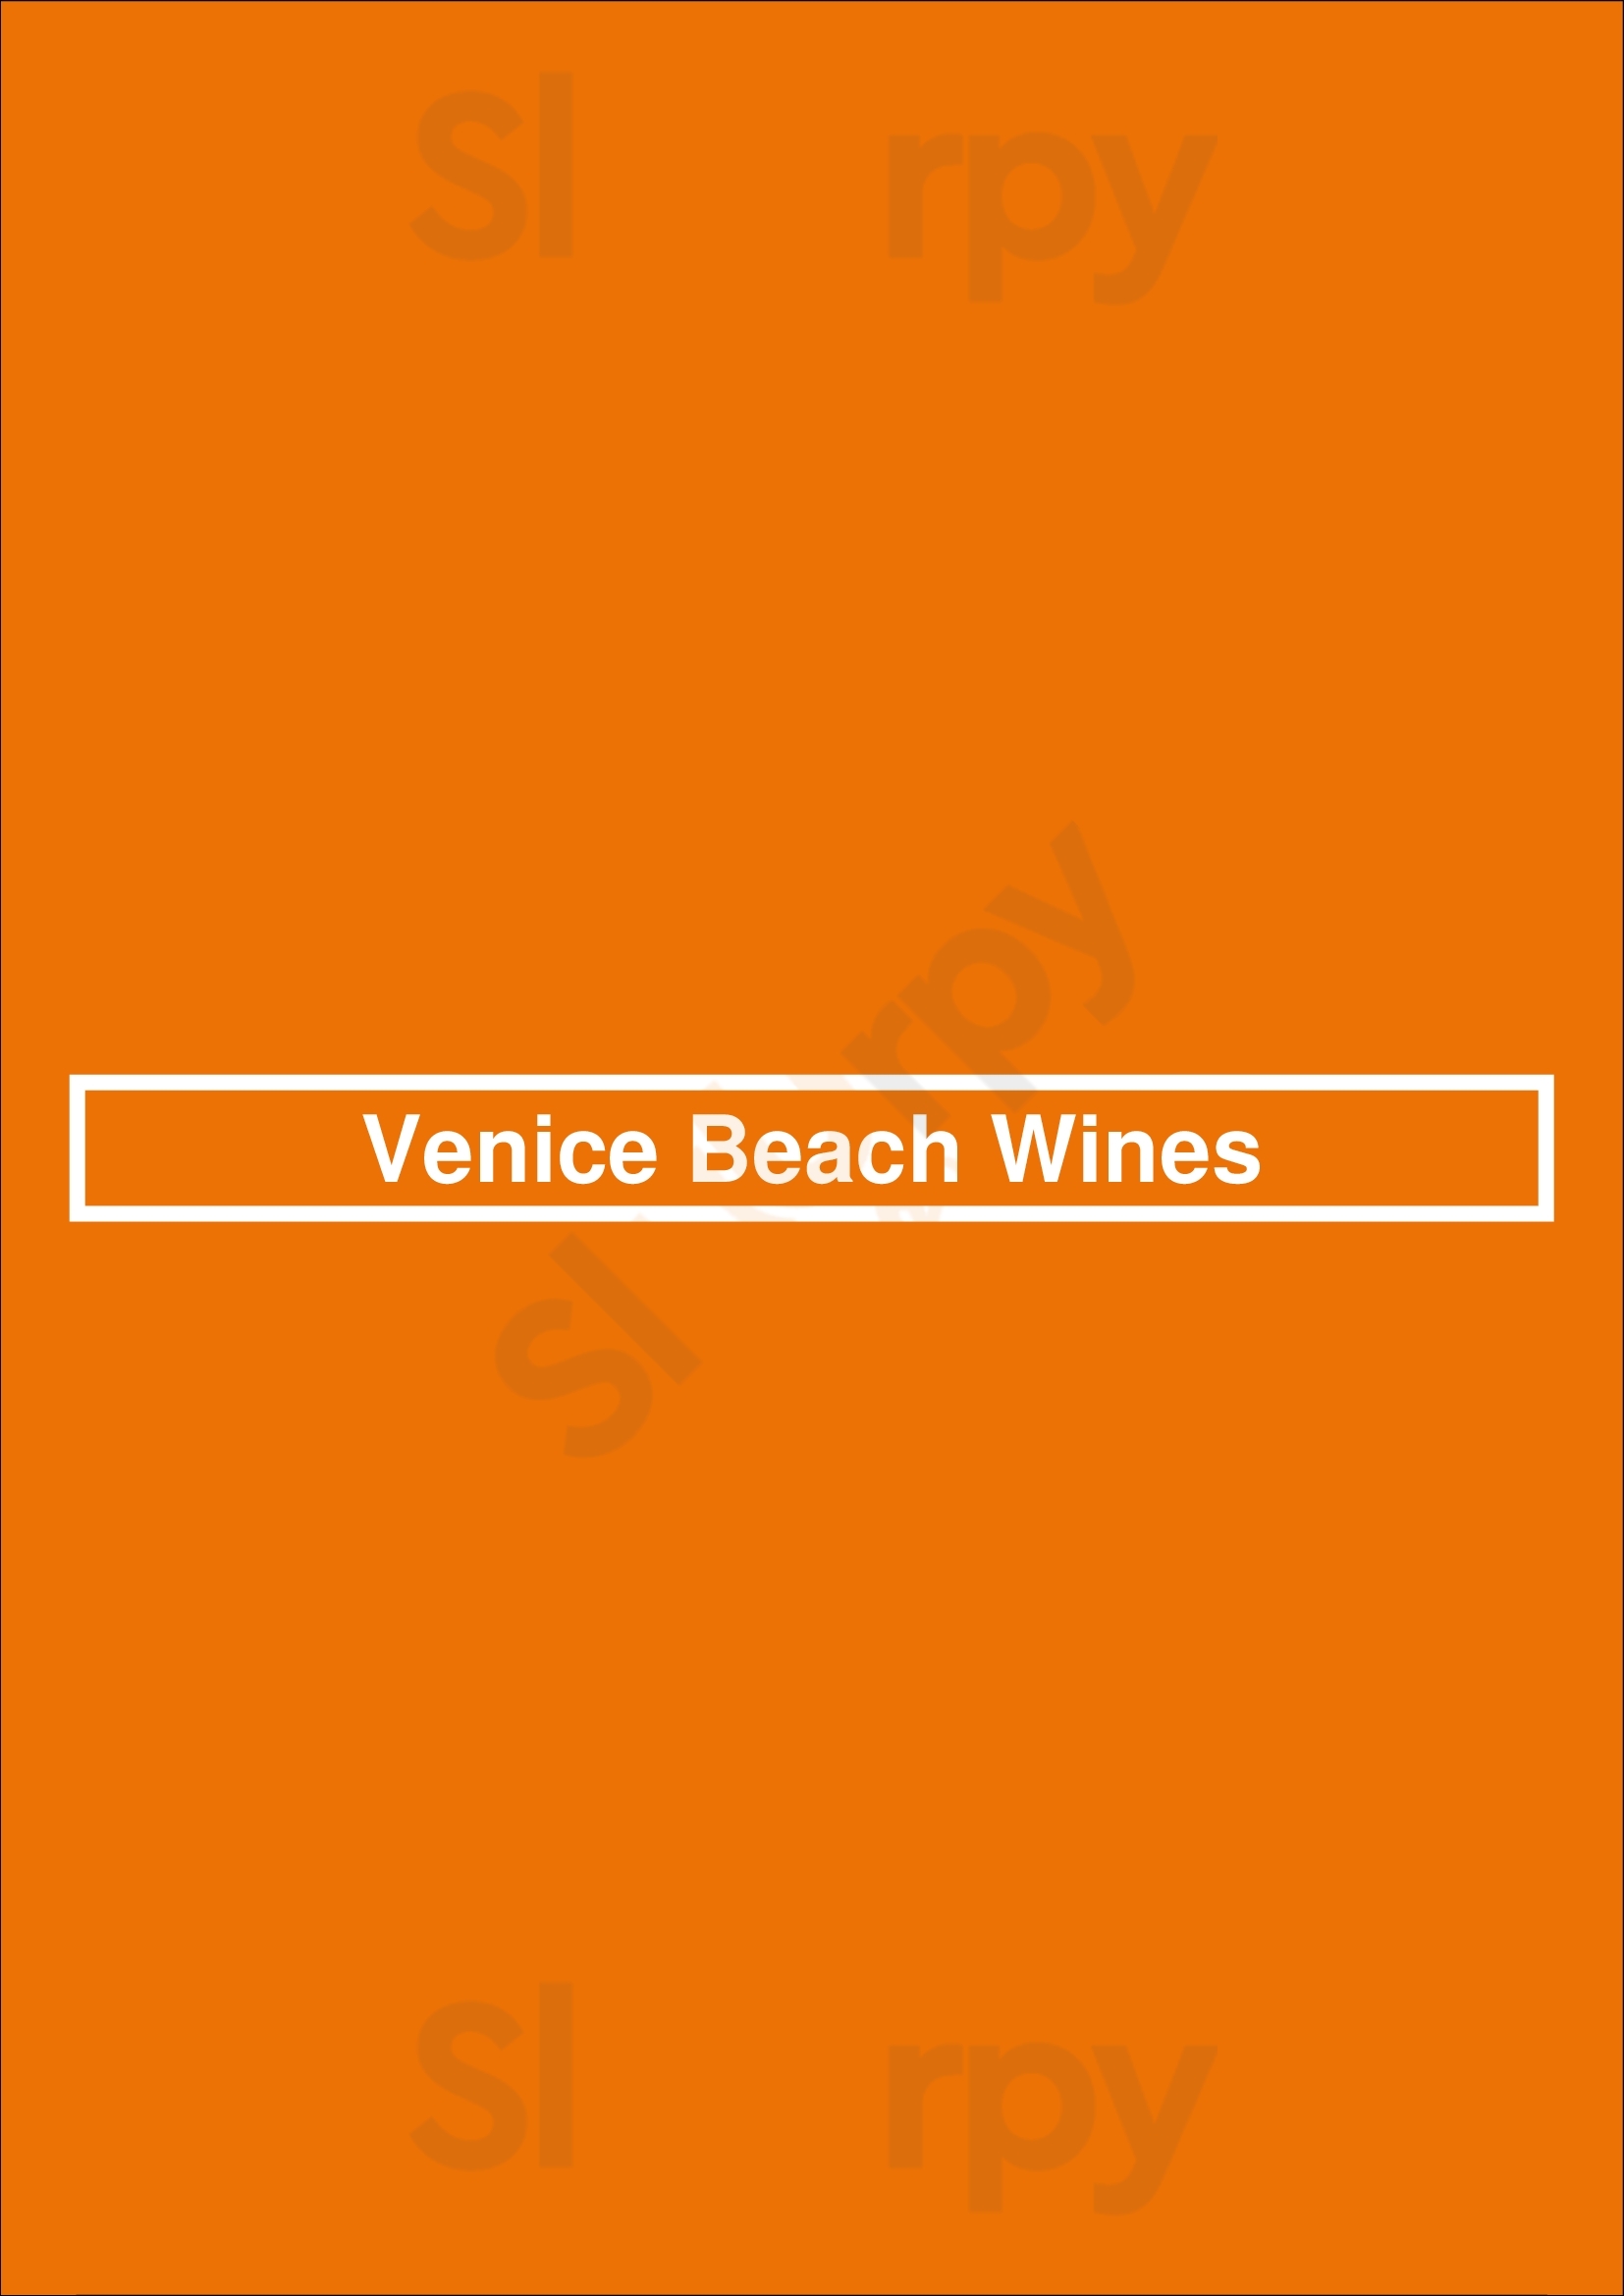 Venice Beach Wines Los Angeles Menu - 1